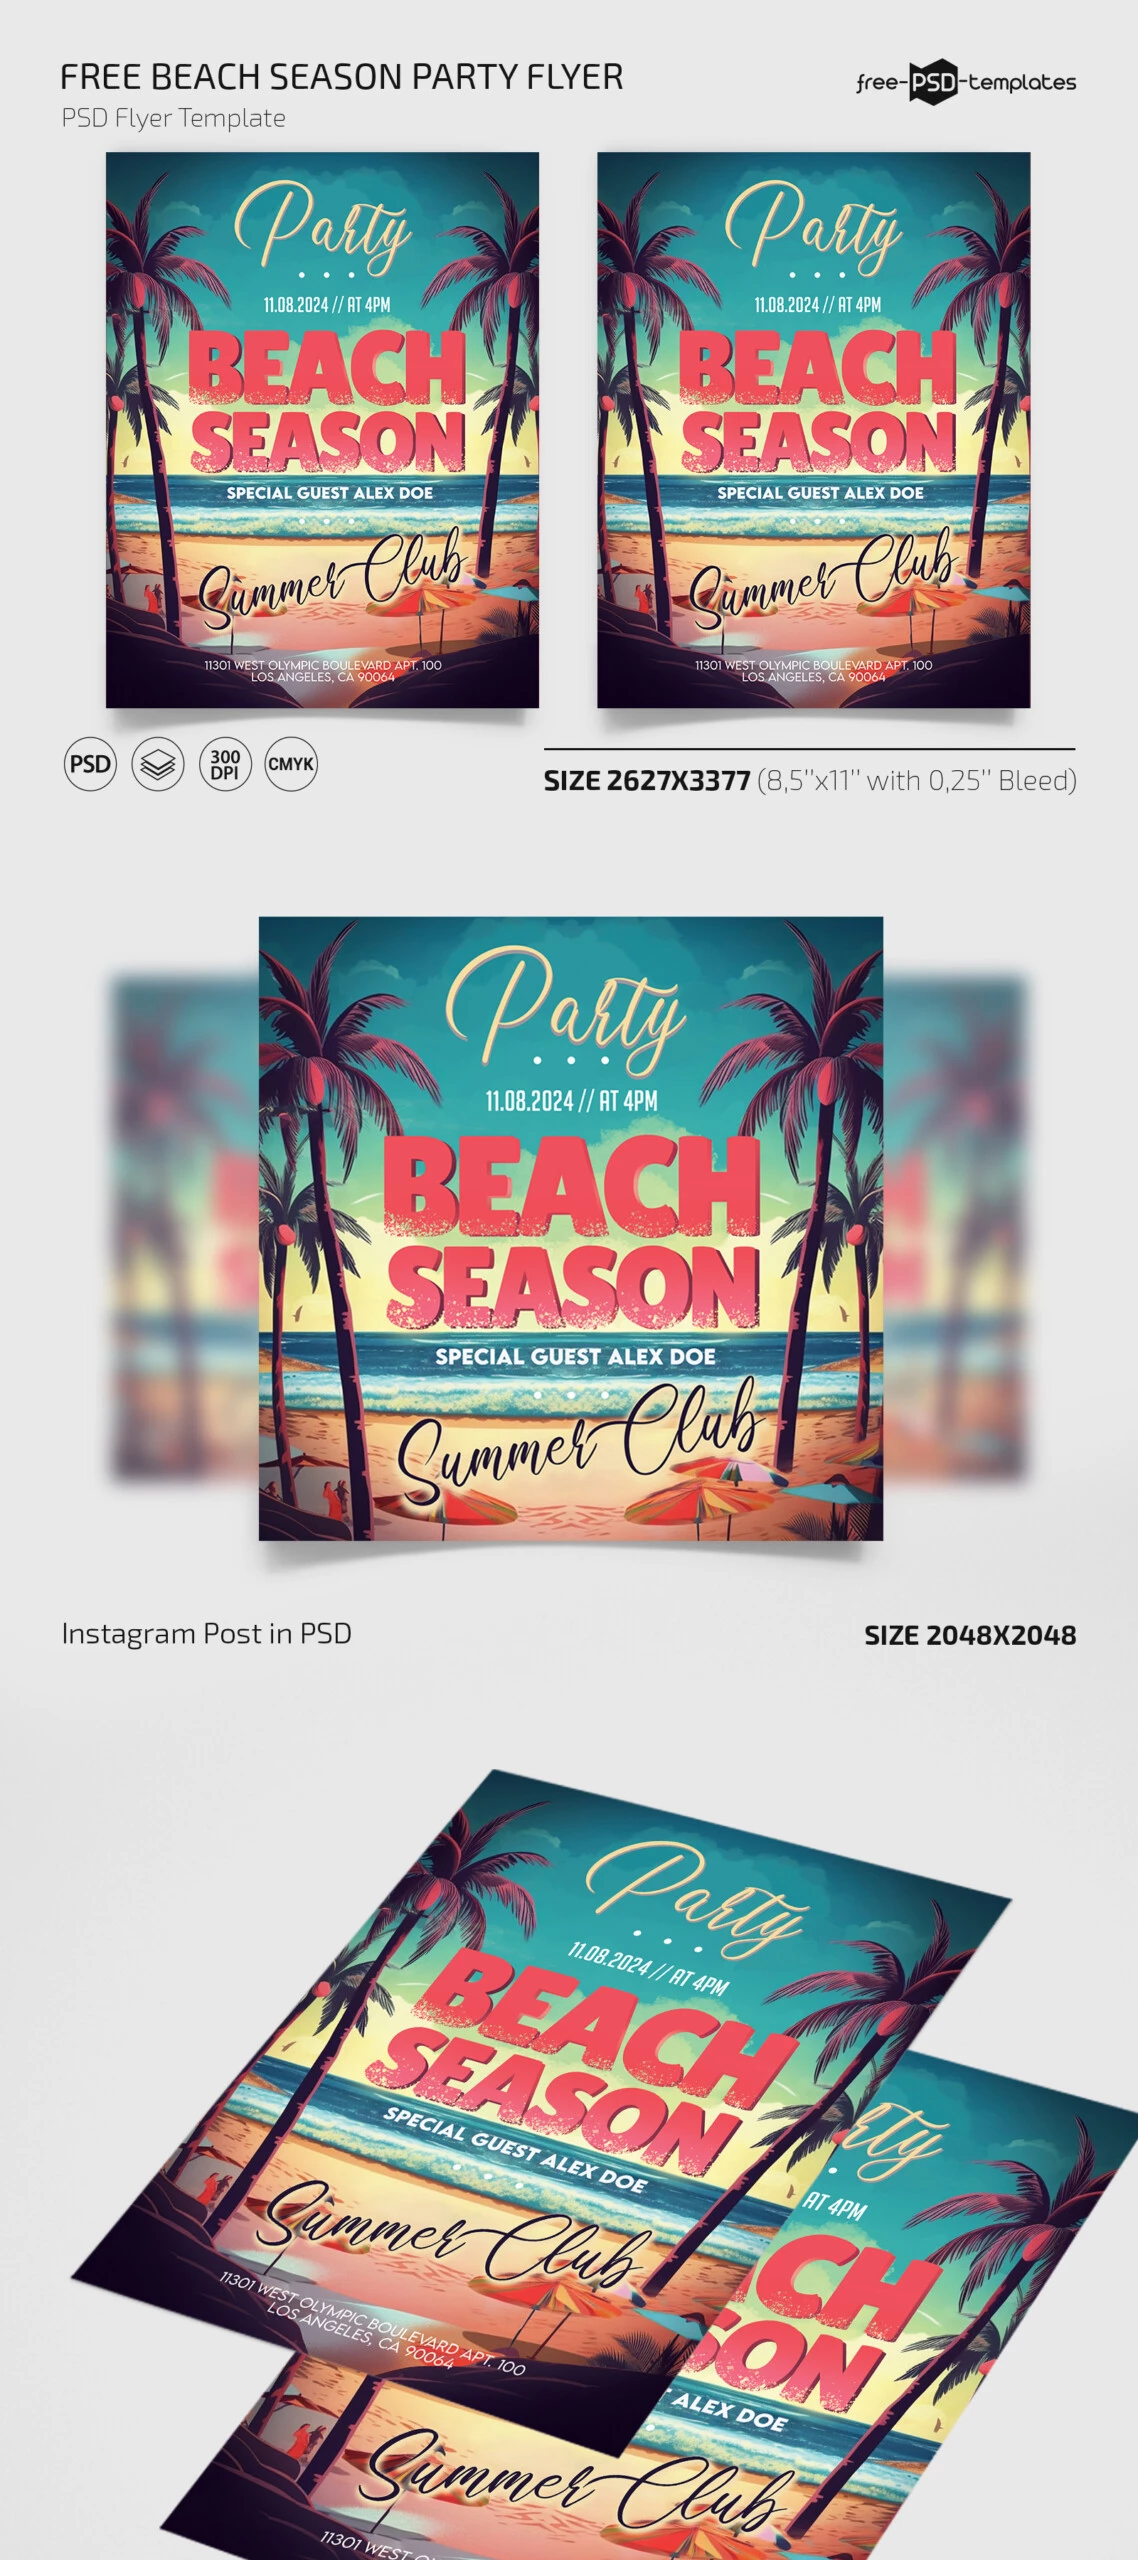 Free Beach Season Party Flyer